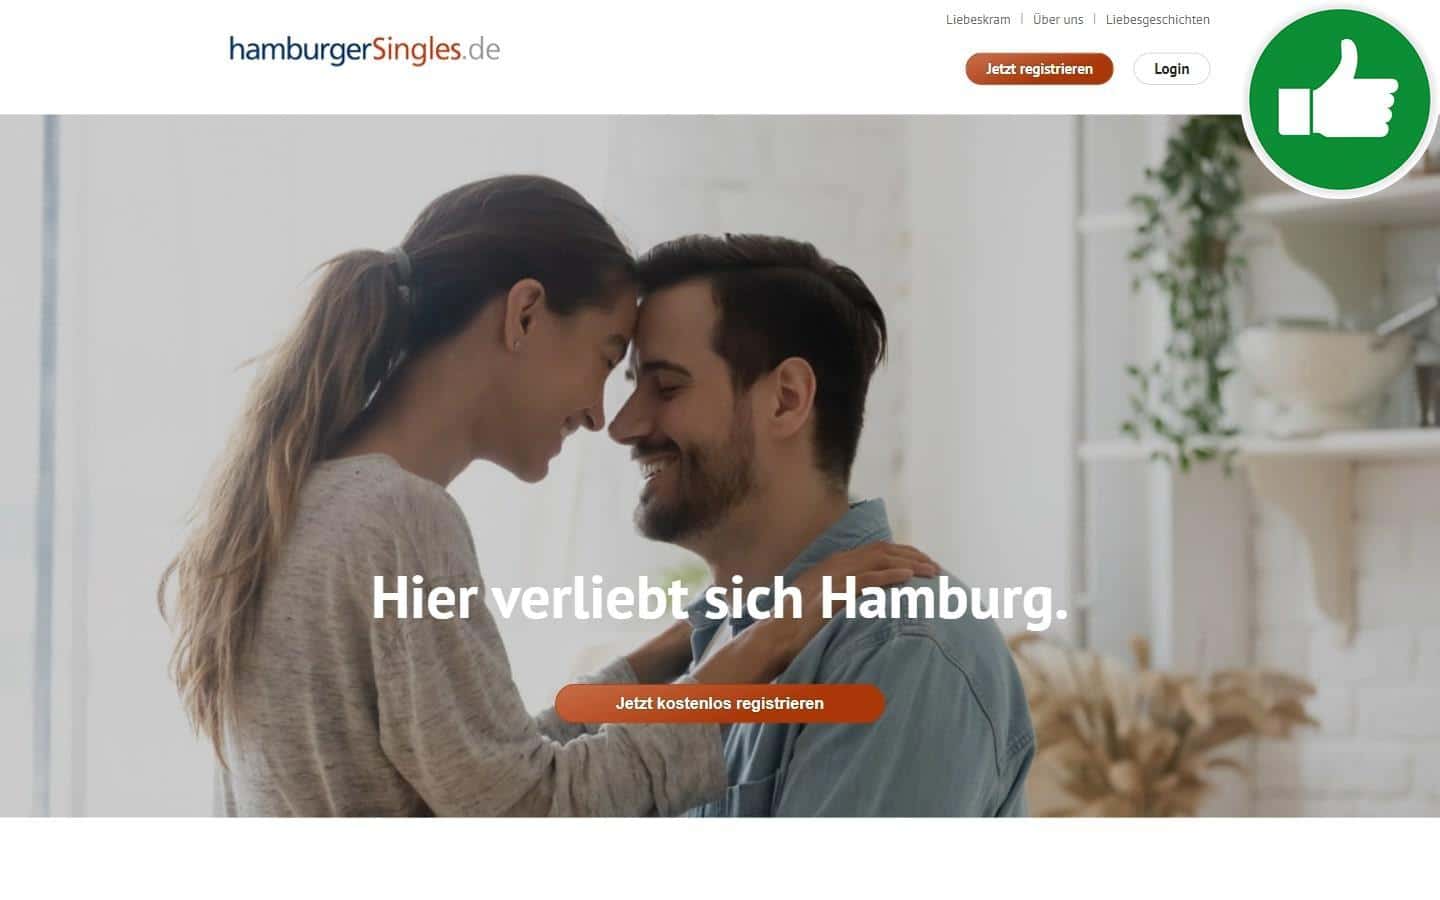 Testbericht HamburgerSingles.de Abzocke